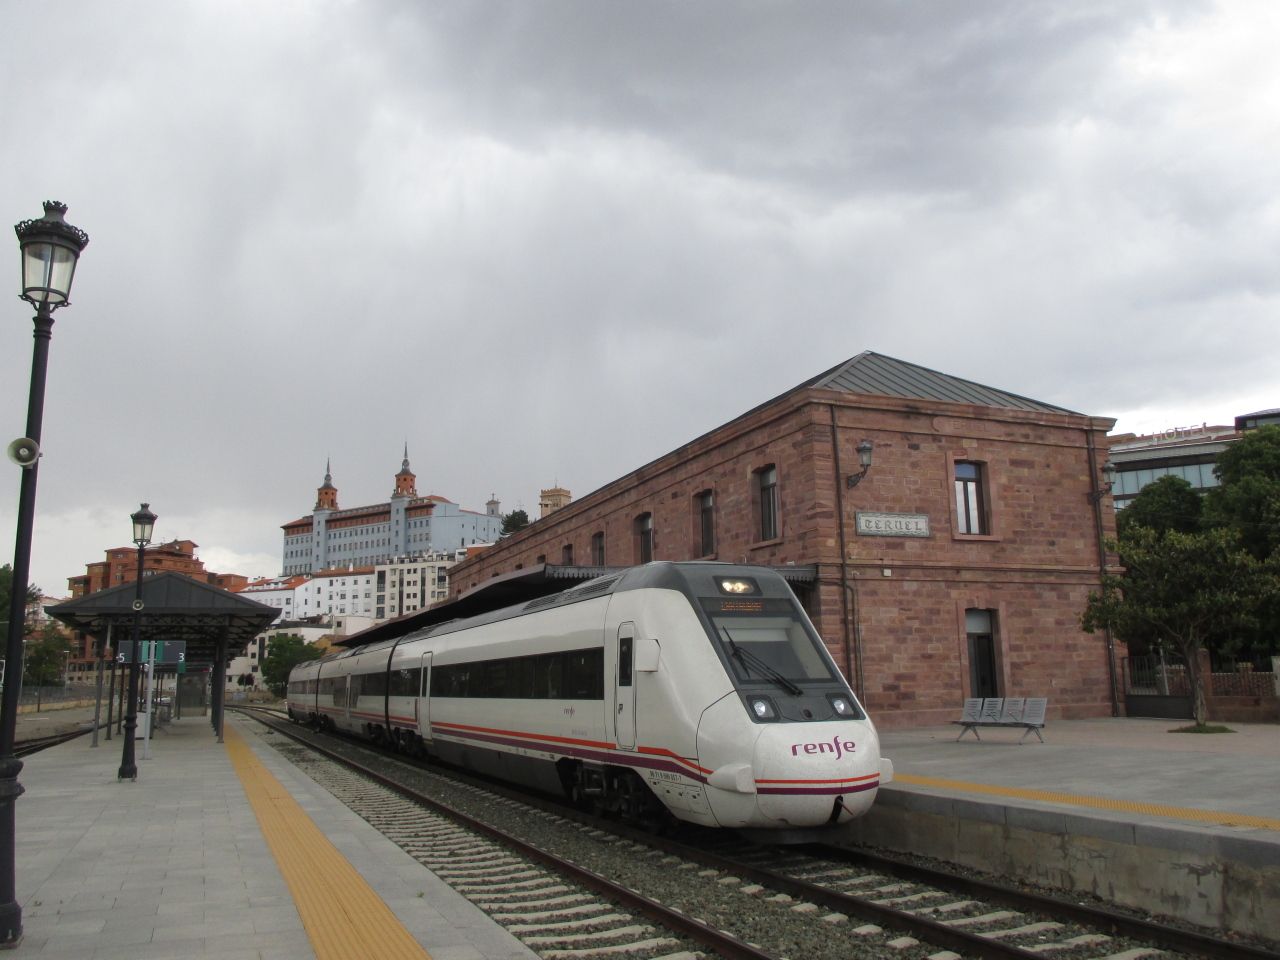  photo Teruel RENFE_zps57bvxp47.jpg